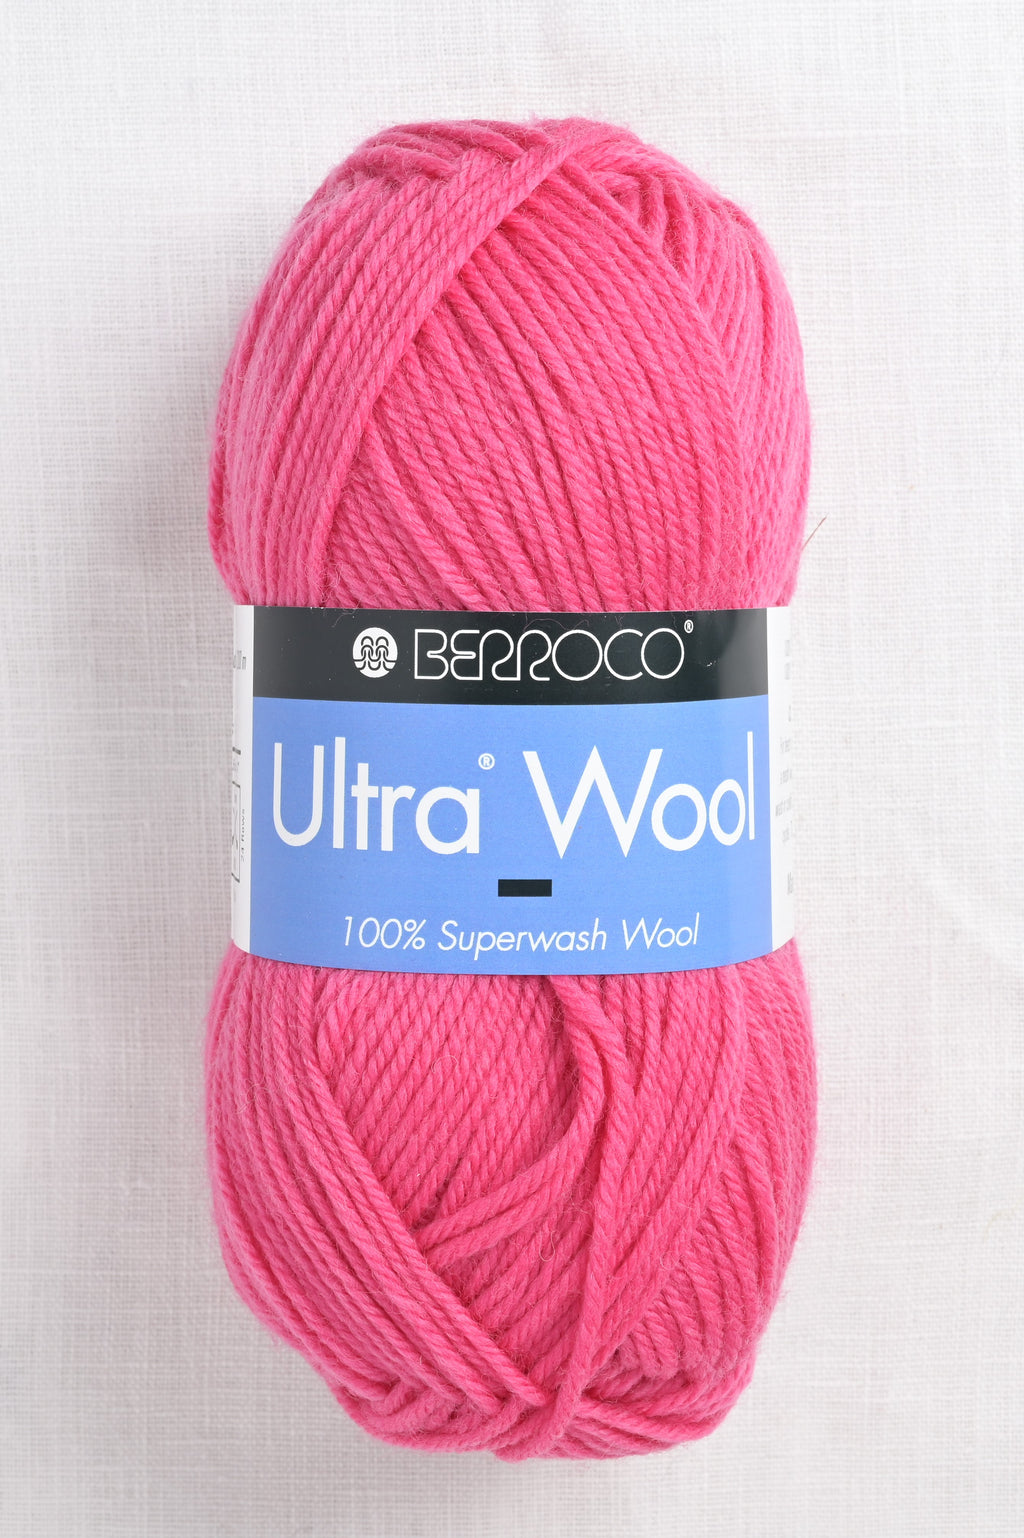 berroco ultra wool 3331 hibiscus